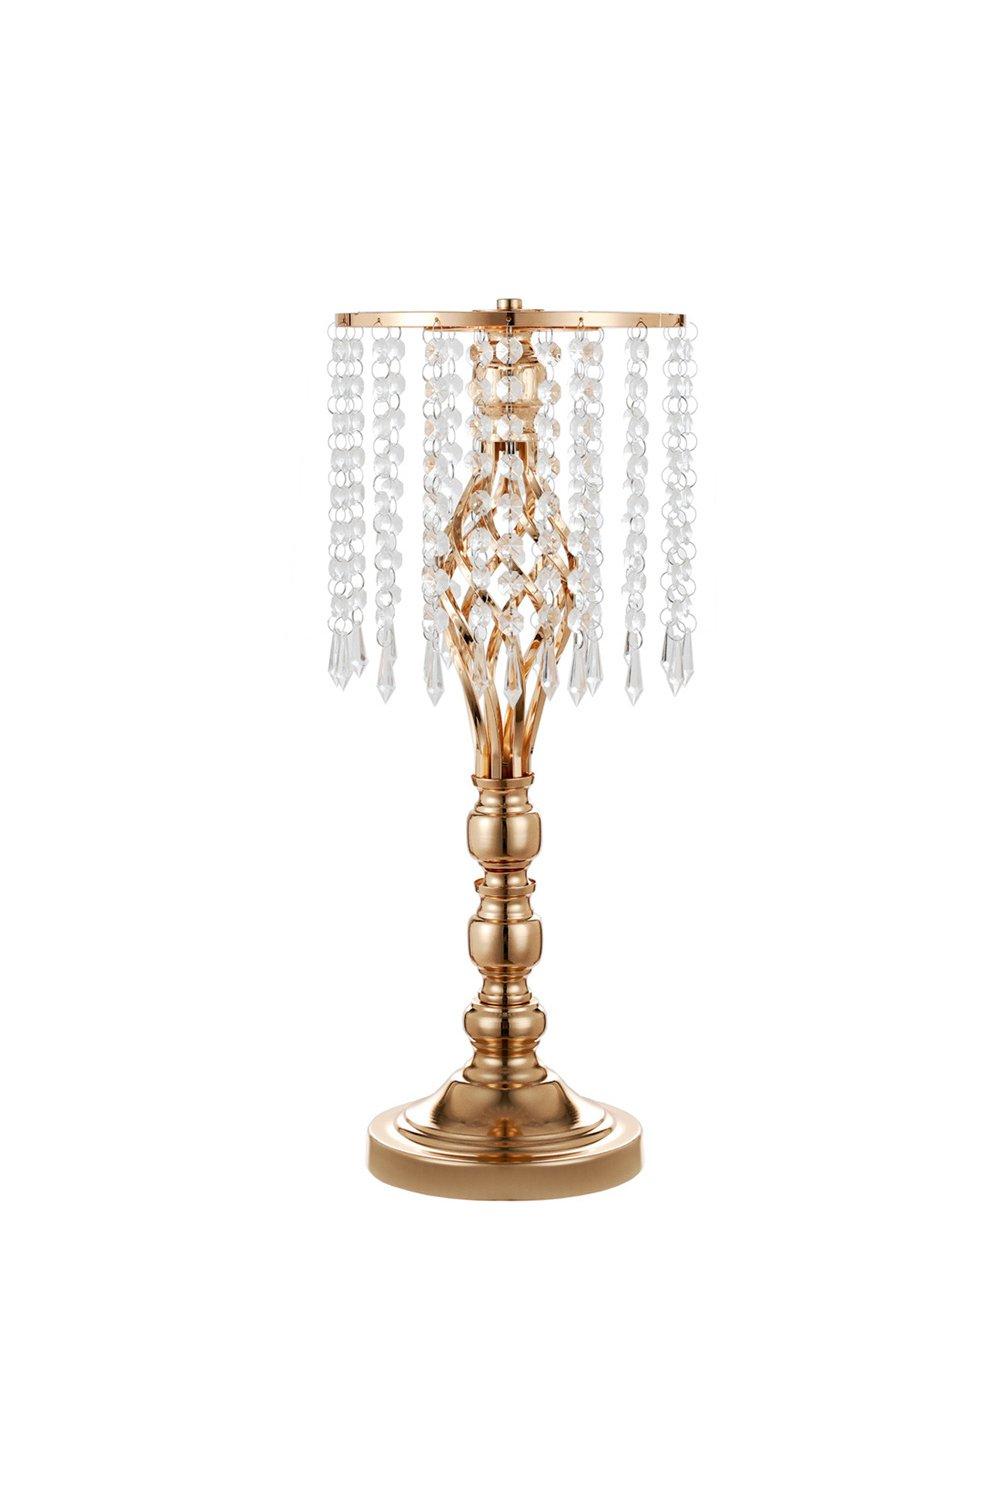 Crystal Tall Vase Table Centerpiece